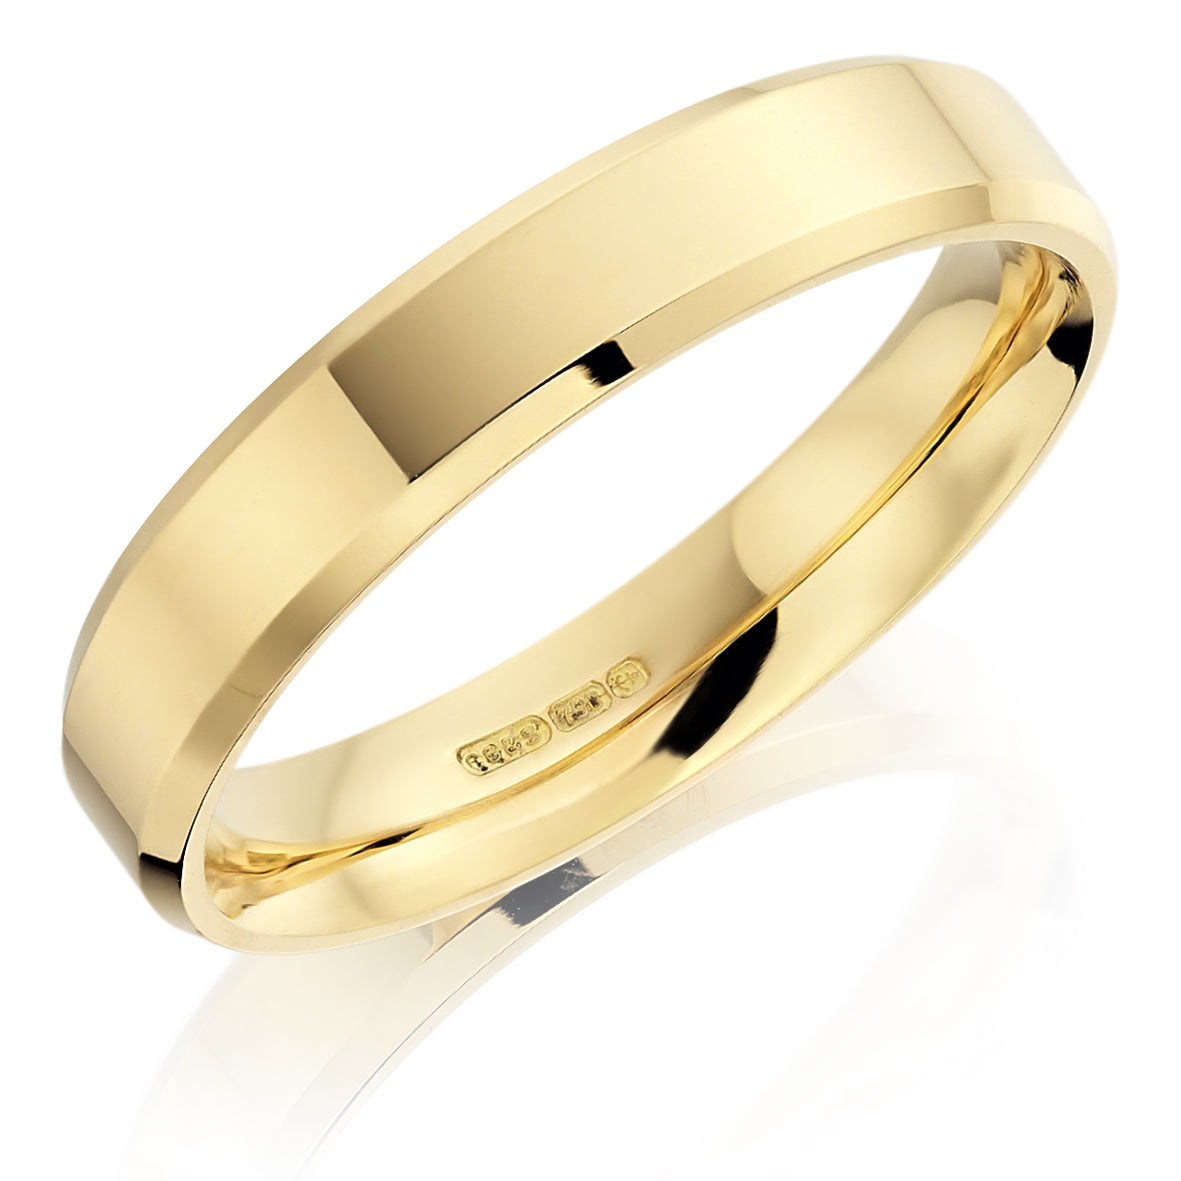 Men's 9ct Yellow Gold 4mm Flat Court Wedding Ring